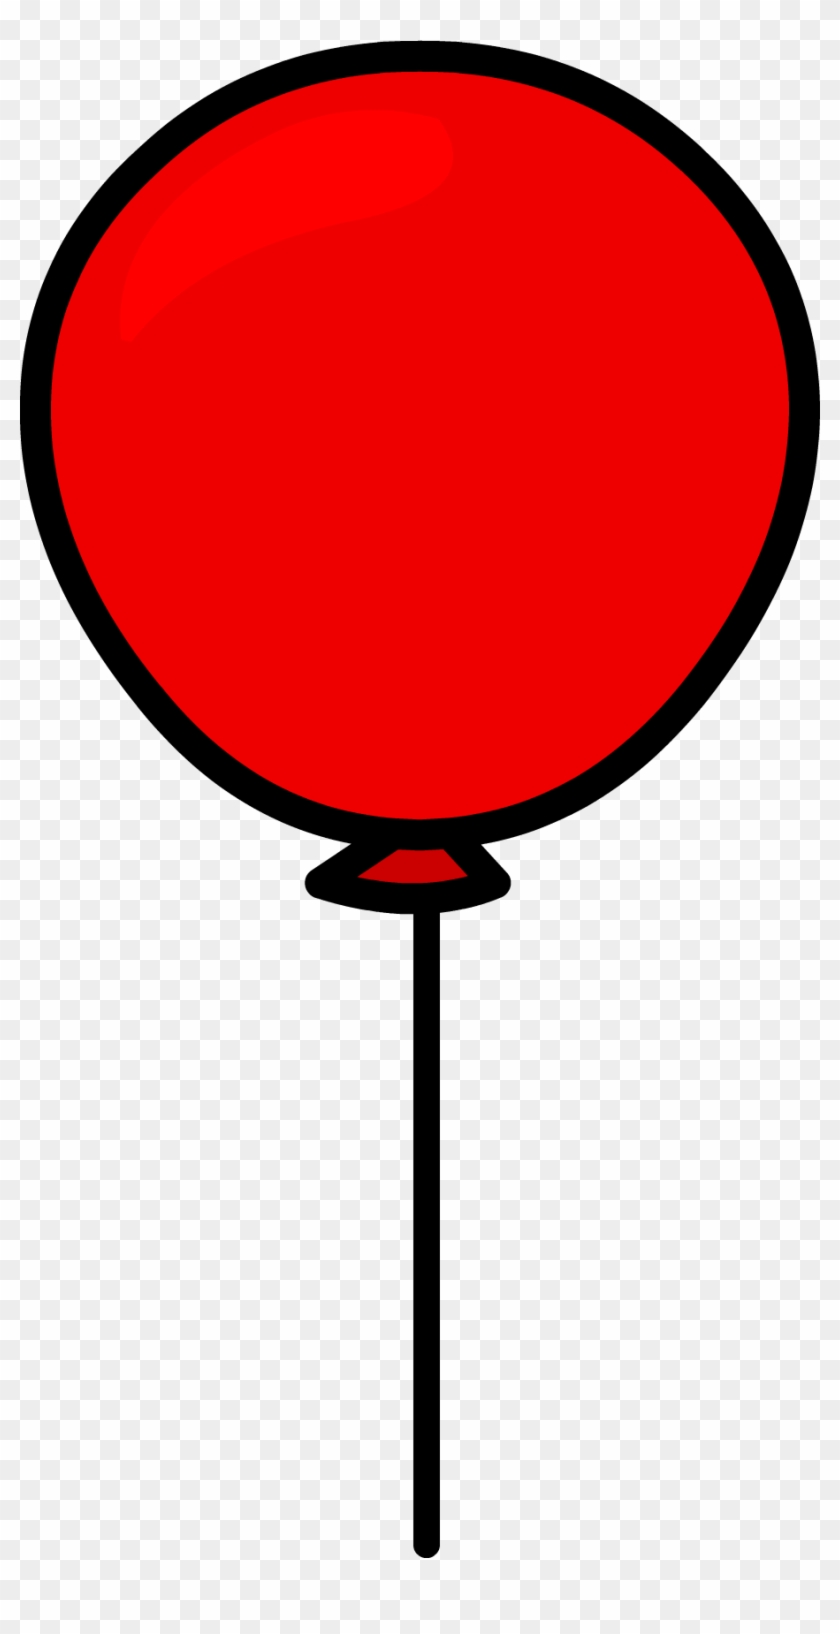 Red Balloon Sprite 005 - Red Balloon Clip Art #1323843